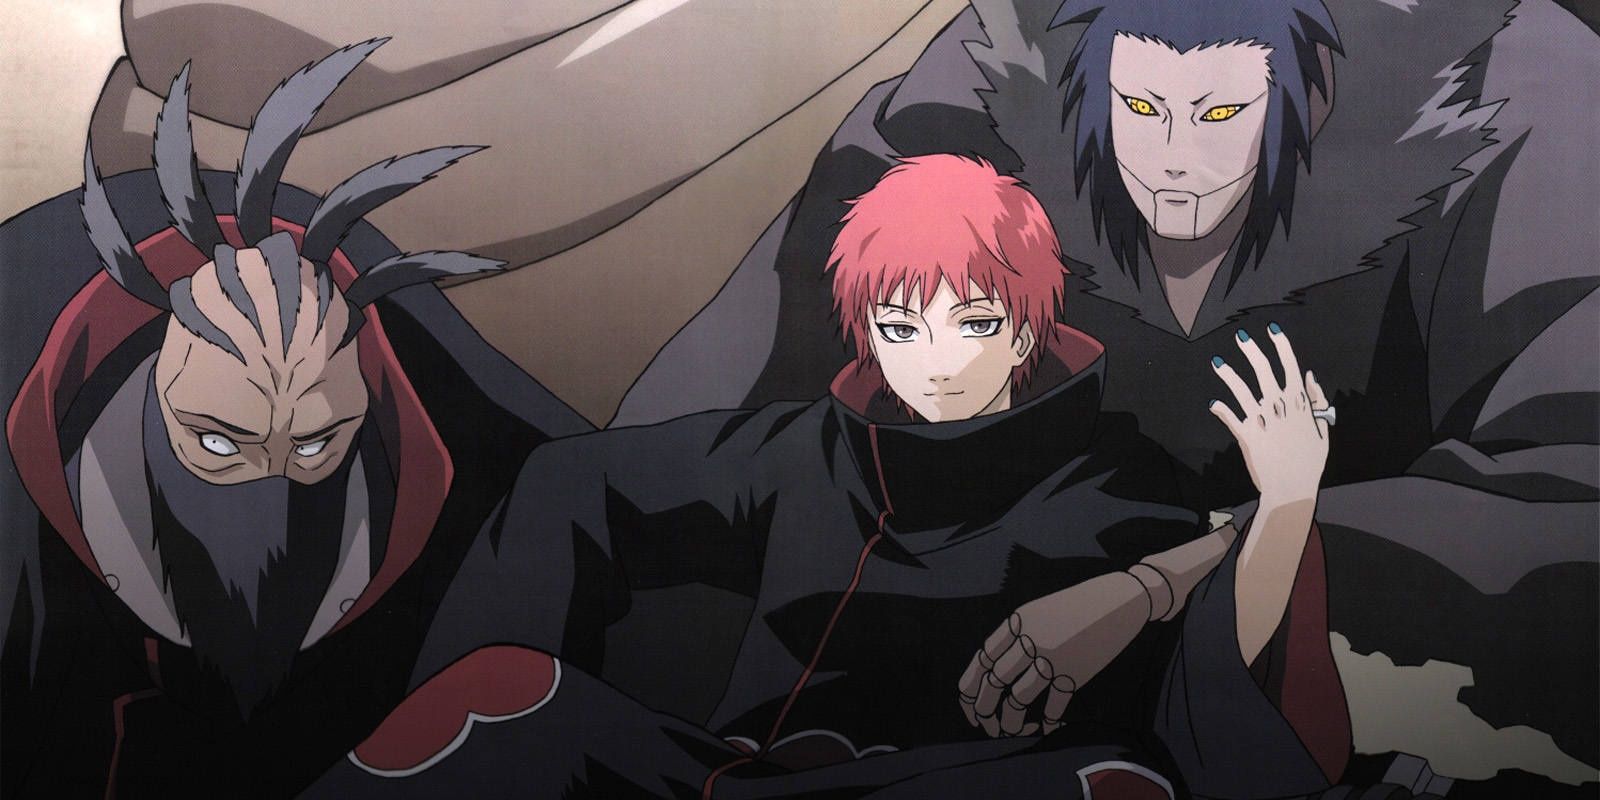 Sasori, member of the Akatsuki, sitting next to two of his favorite puppets in Naruto.